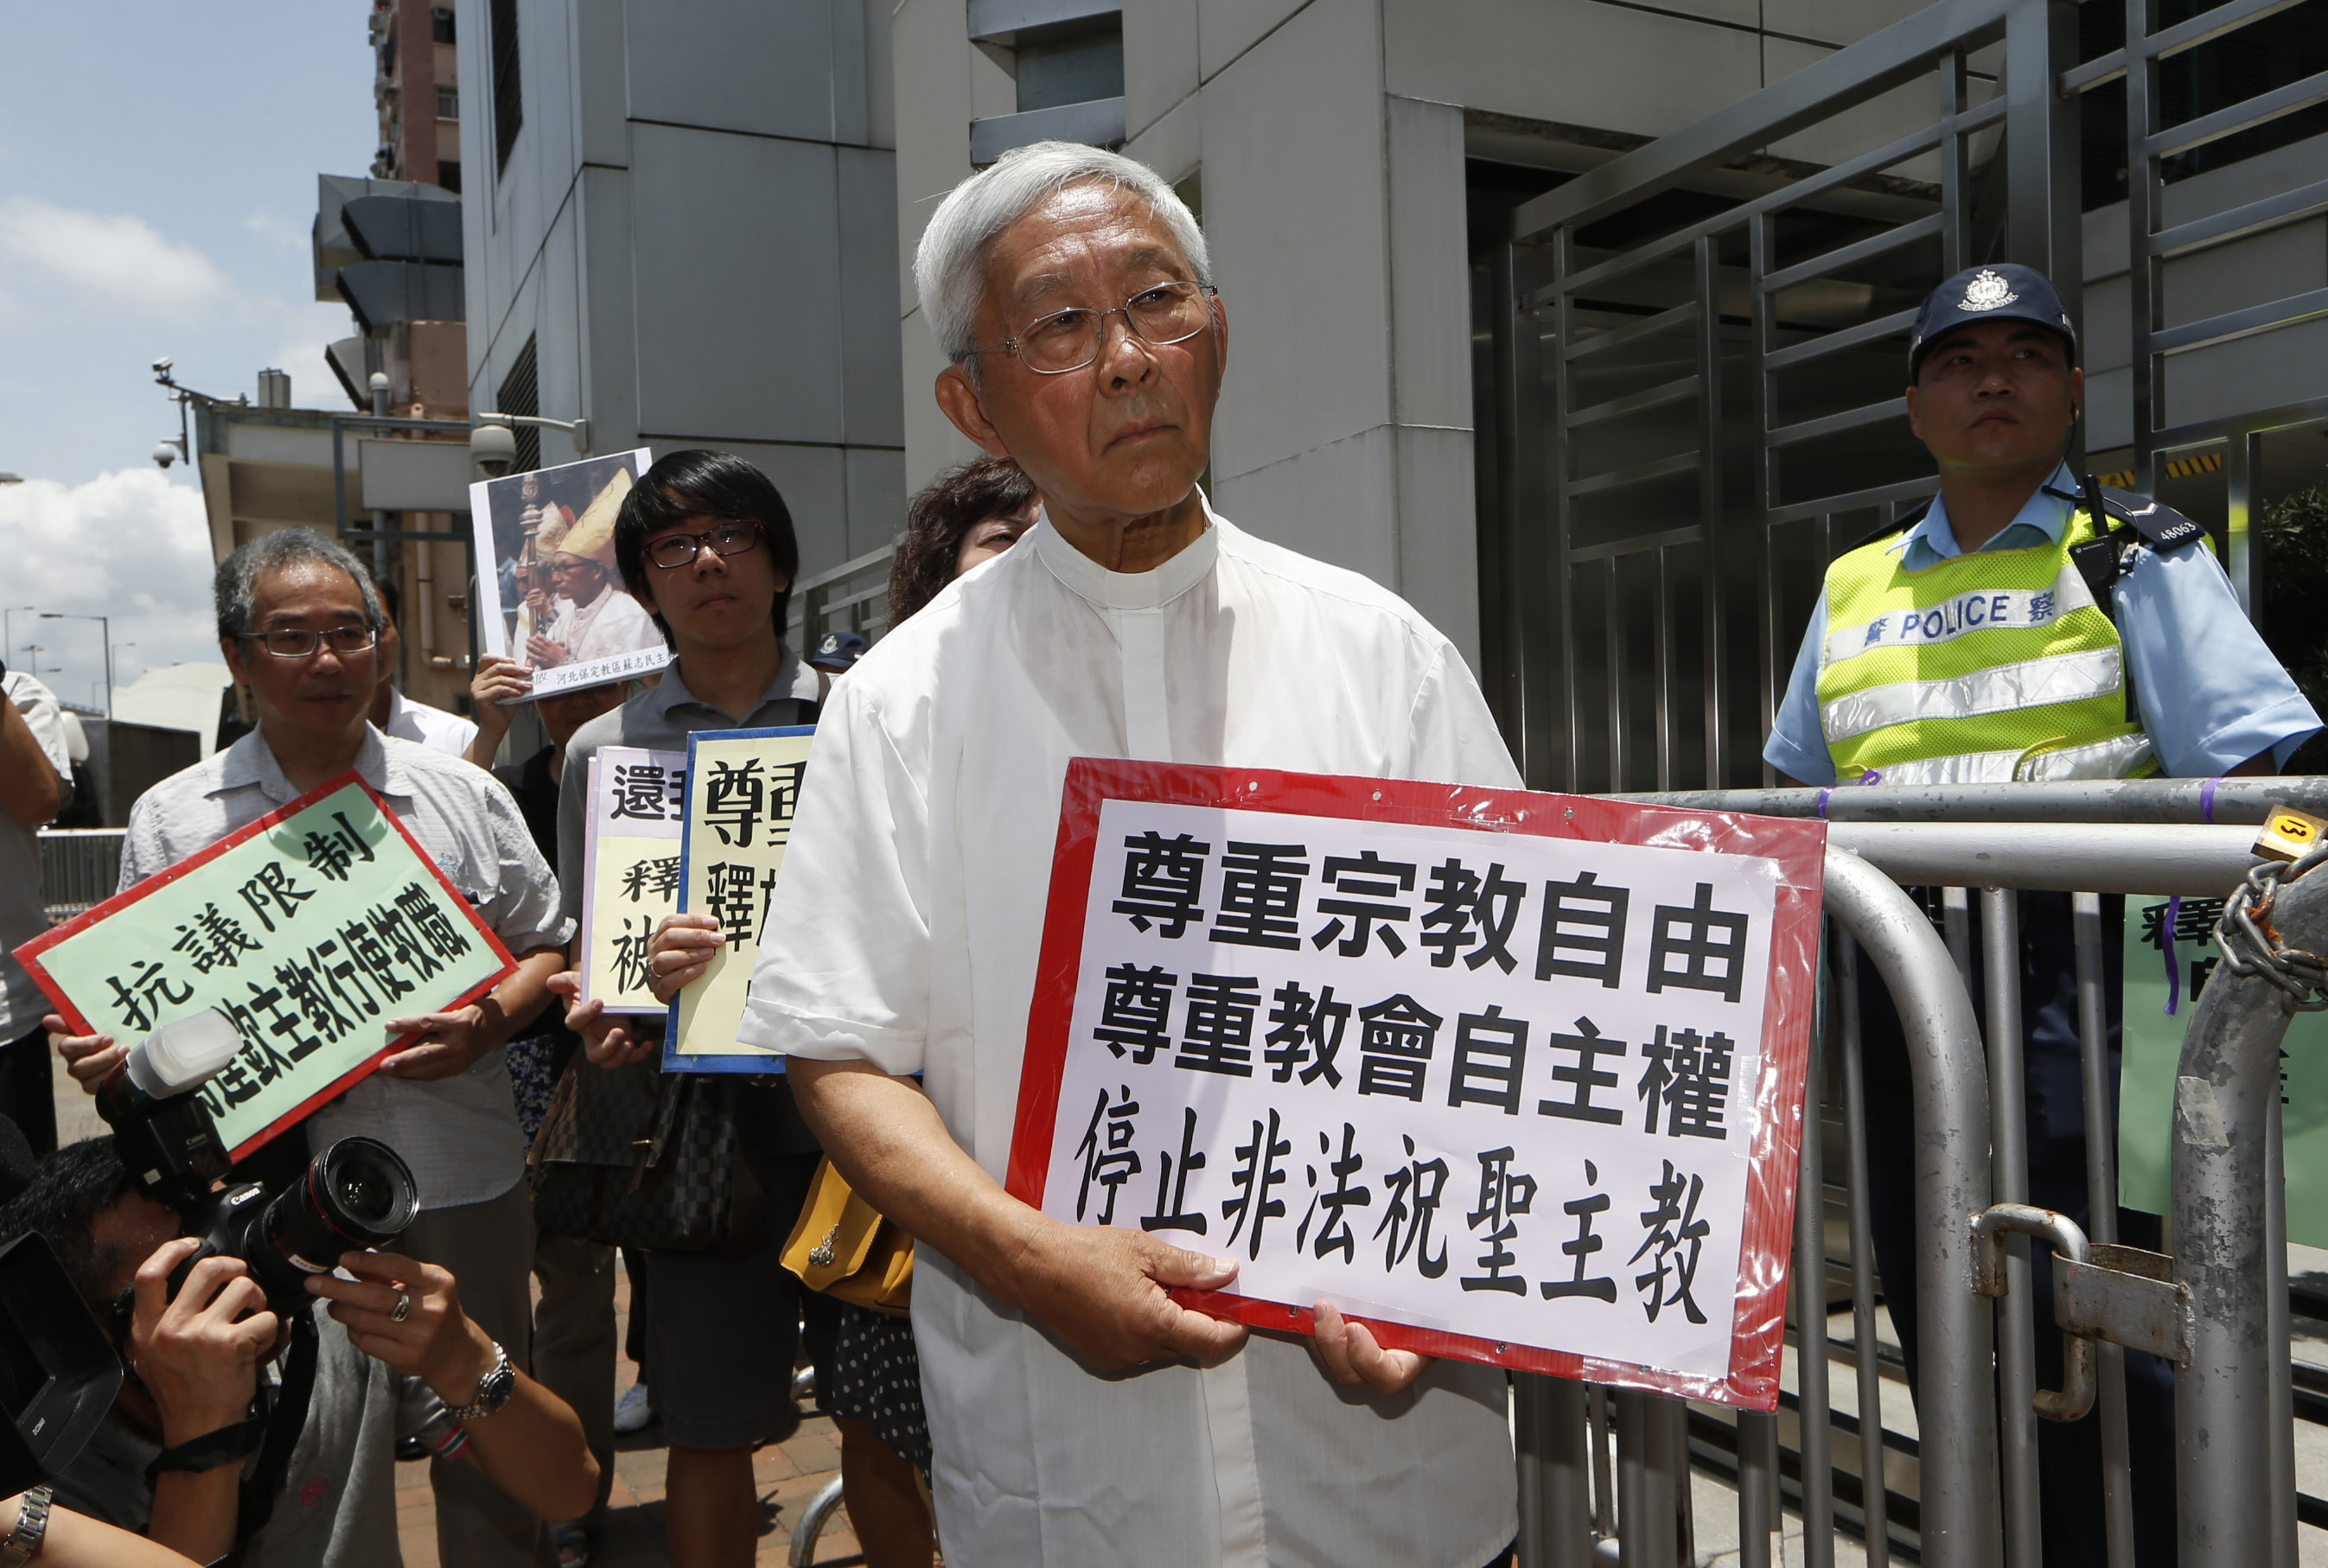 El cardenal católico detenido en Hong Kong ya ha sido liberado